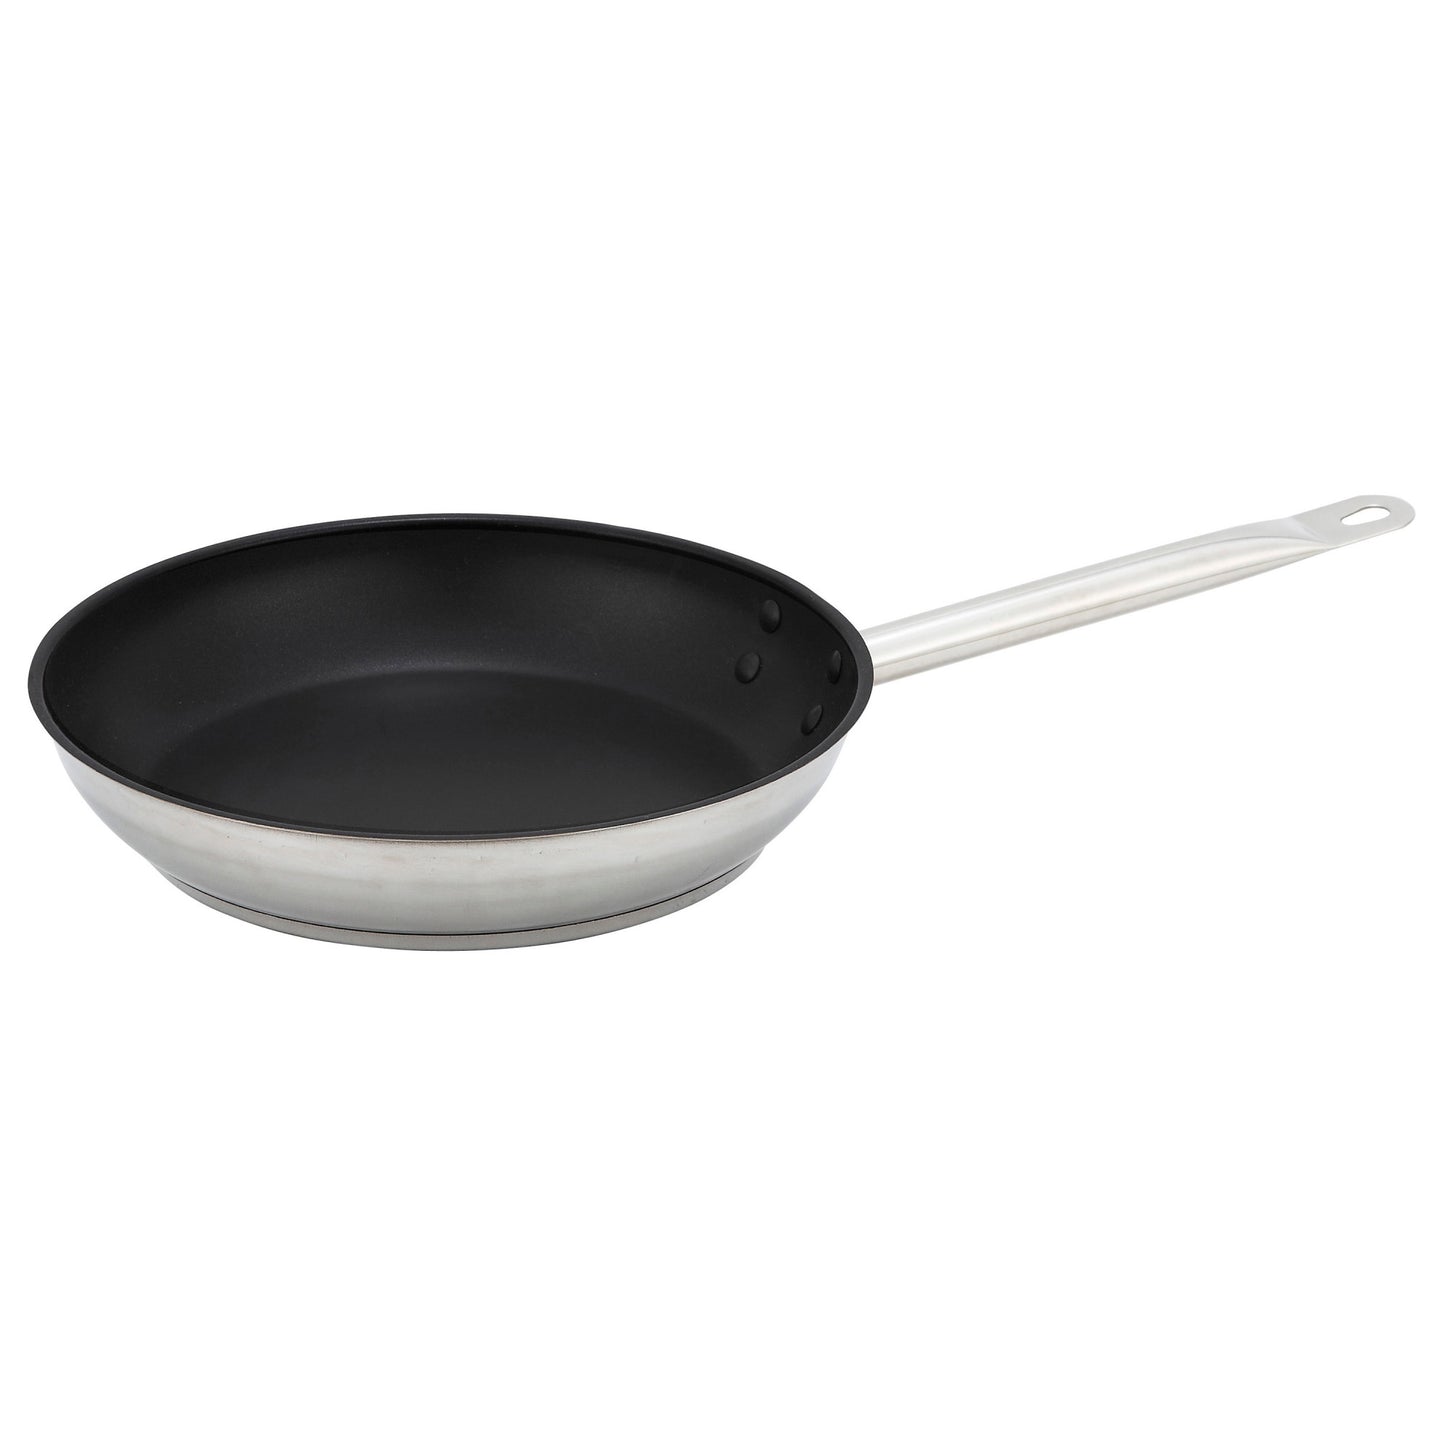 Stainless Steel Fry Pan, Non-Stick - 11" Dia